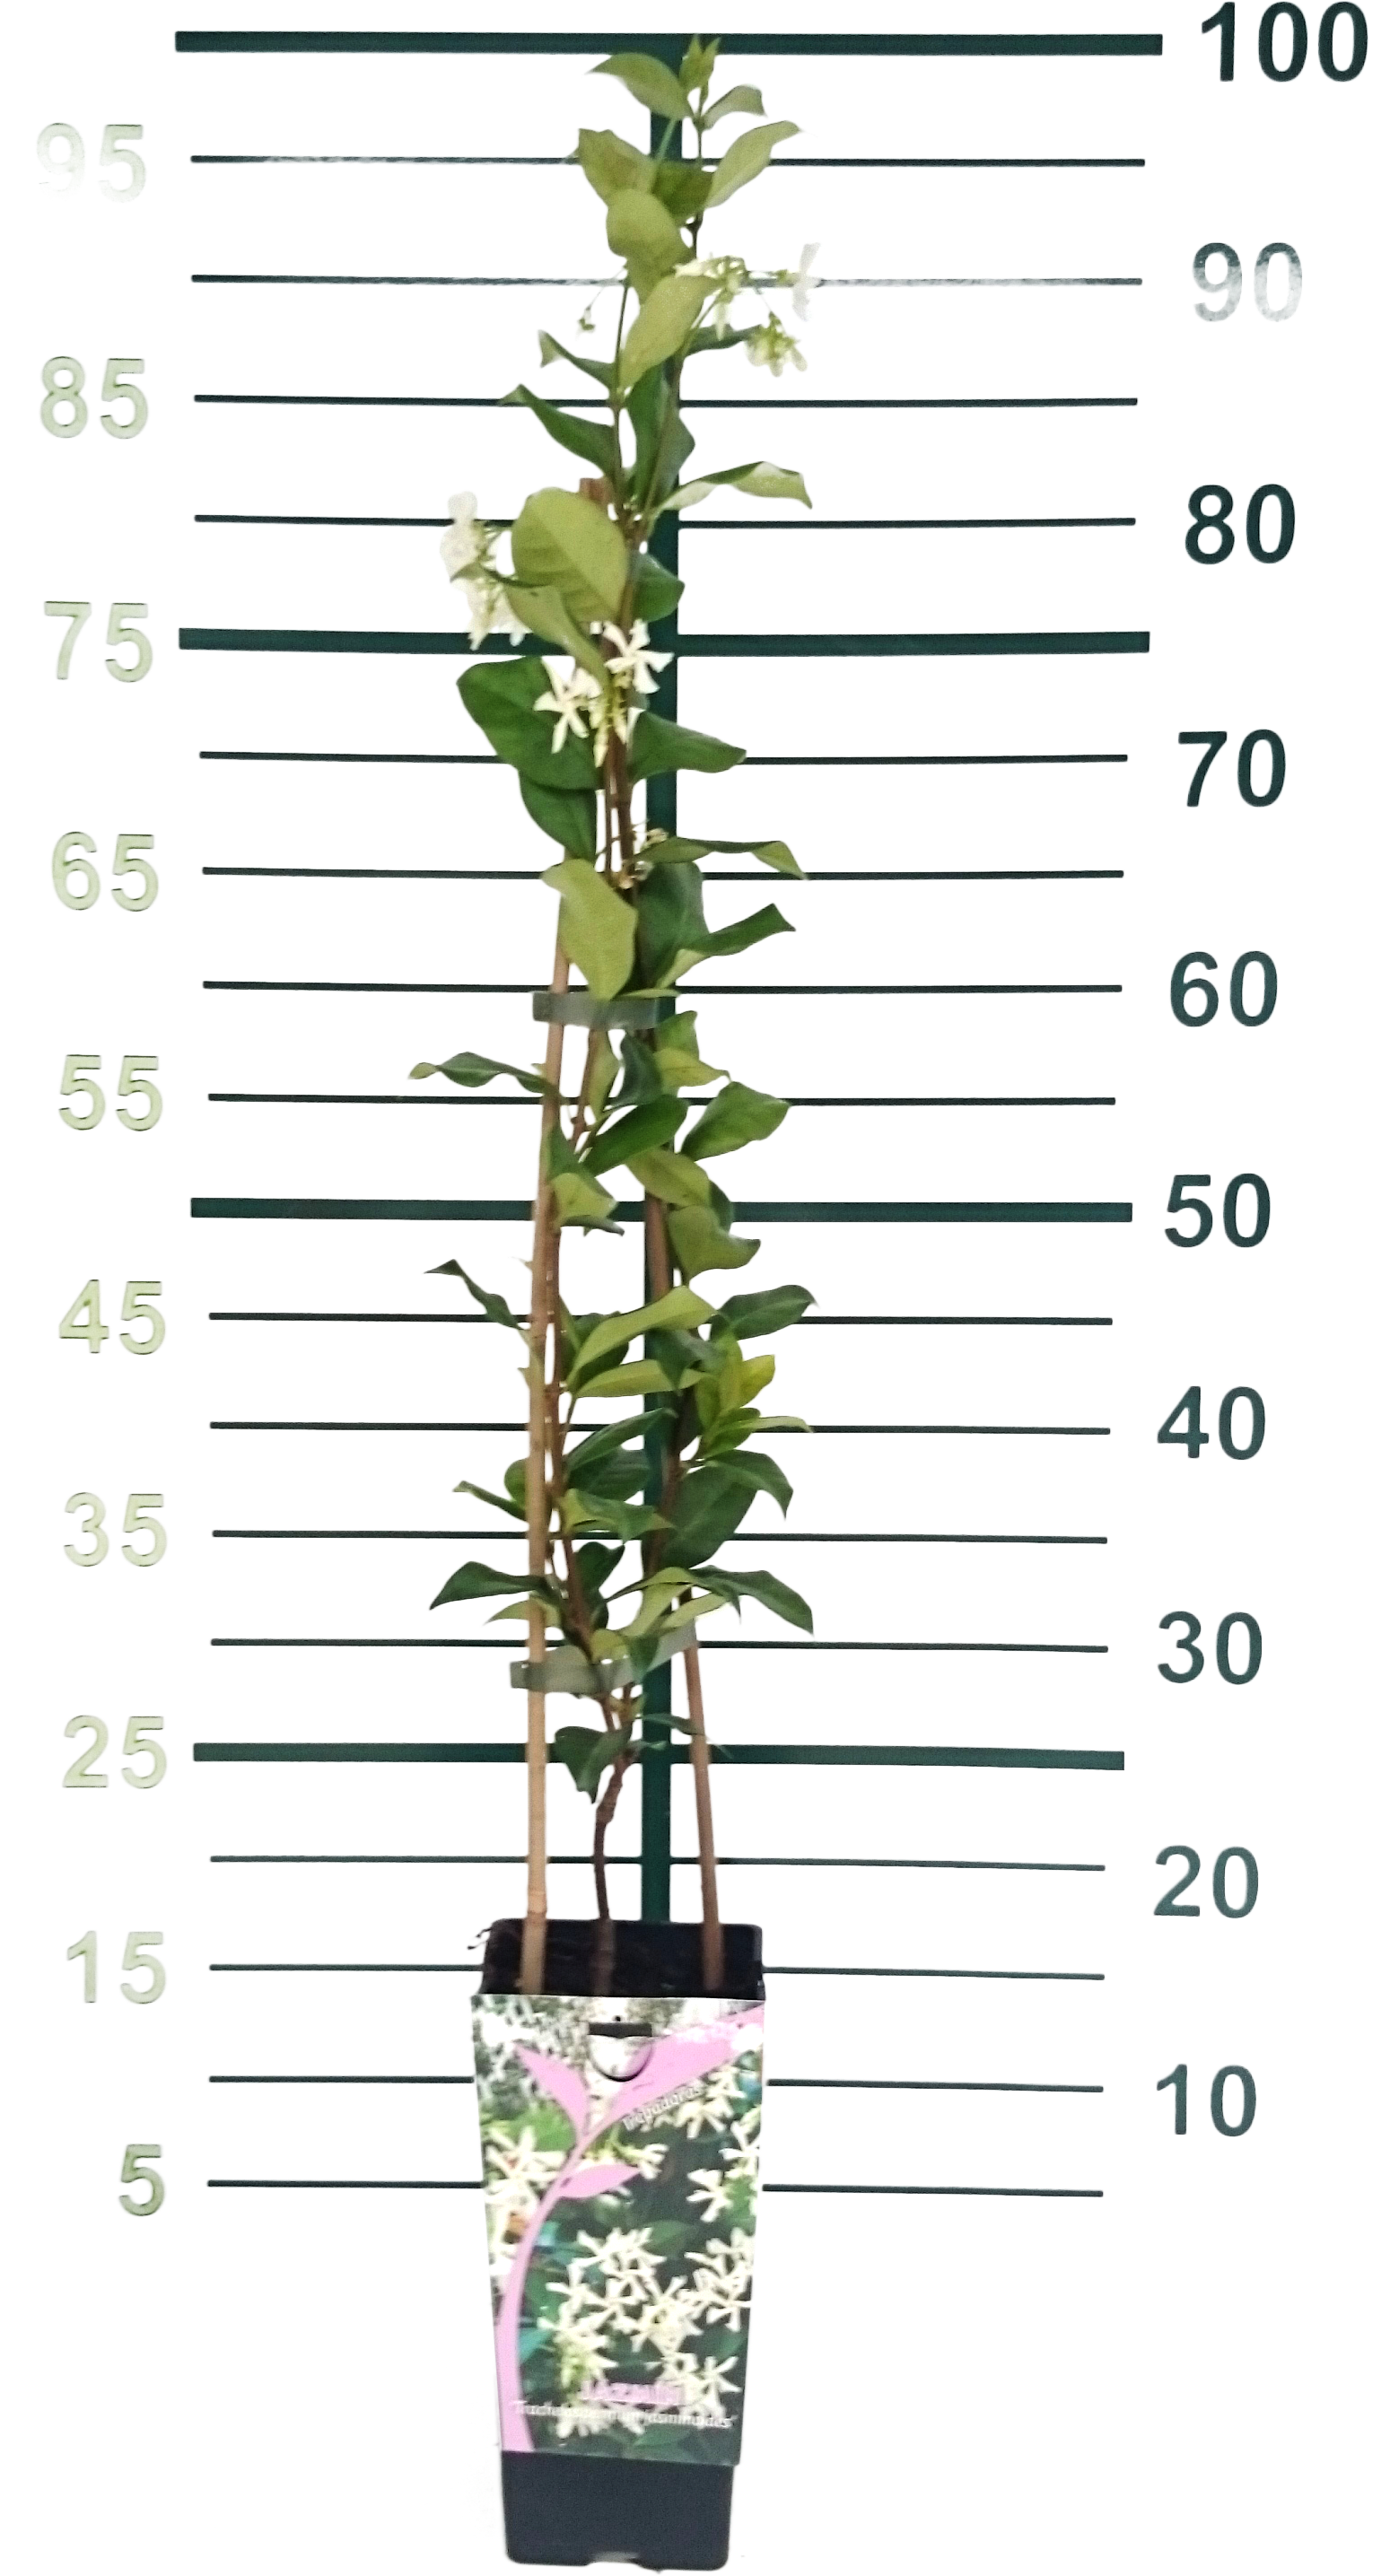 Jazmín estrella (Trachelospermum jasminoides) maceta D5 cm | Leroy Merlin